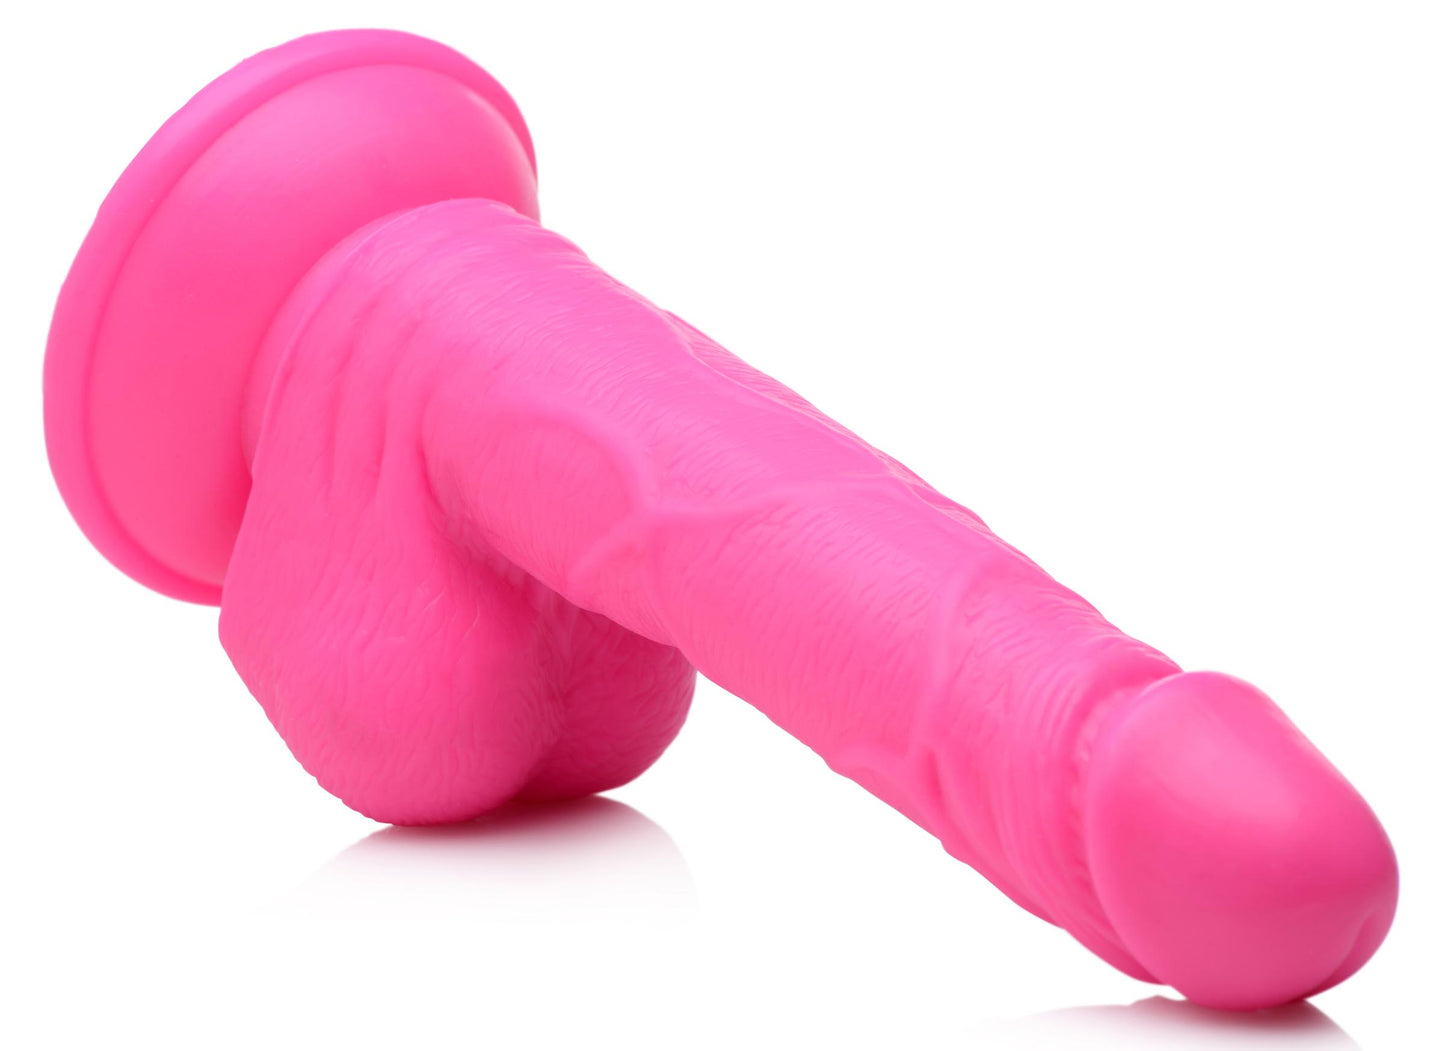 6.5 Inch Dildo with Balls - Pink - UABDSM